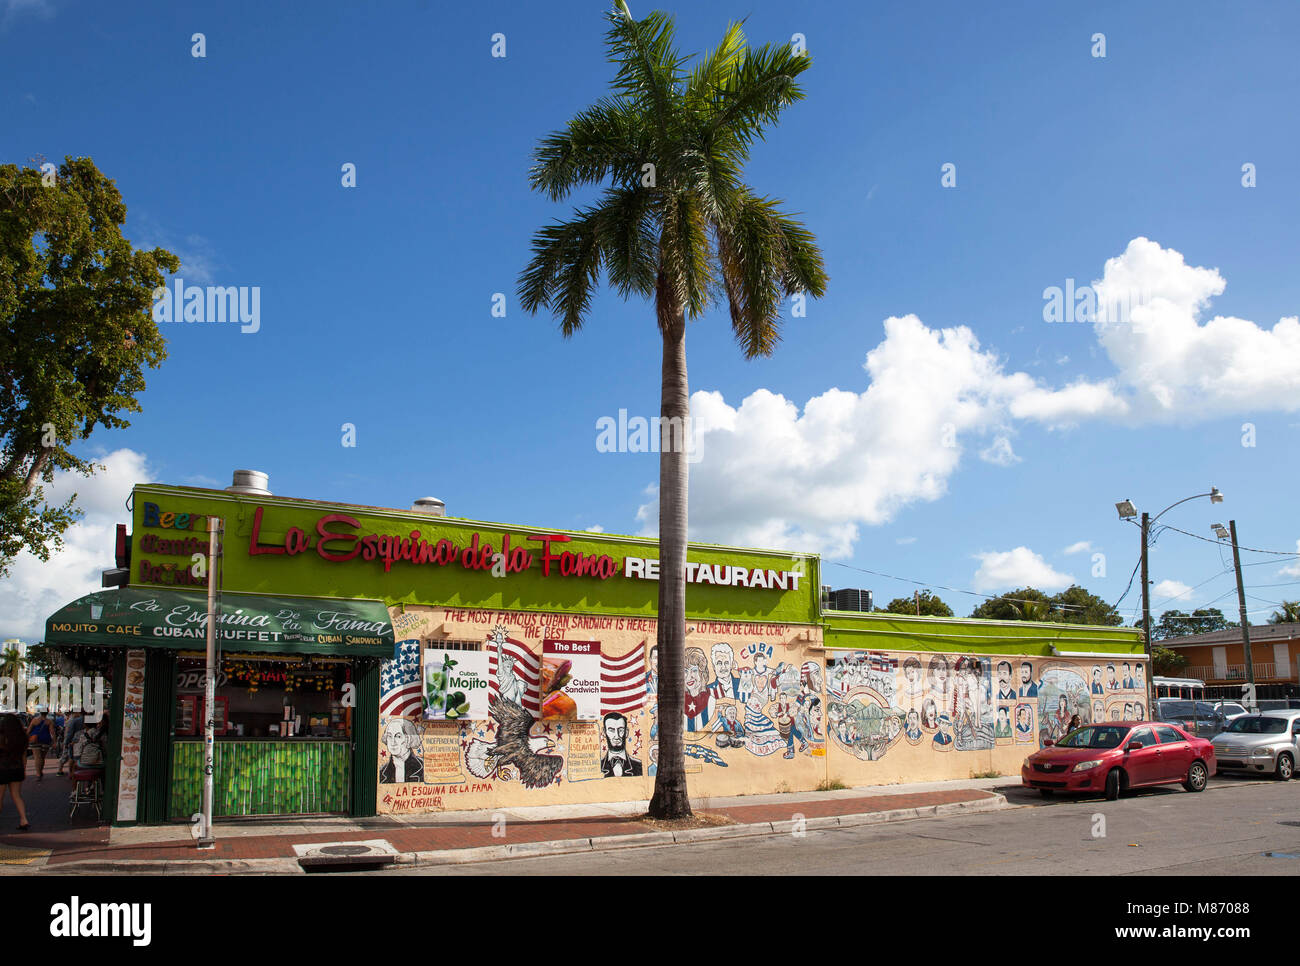 La Esquina de la fama Restaurant, Little Havana, Miami, Florida, USA. Stock Photo